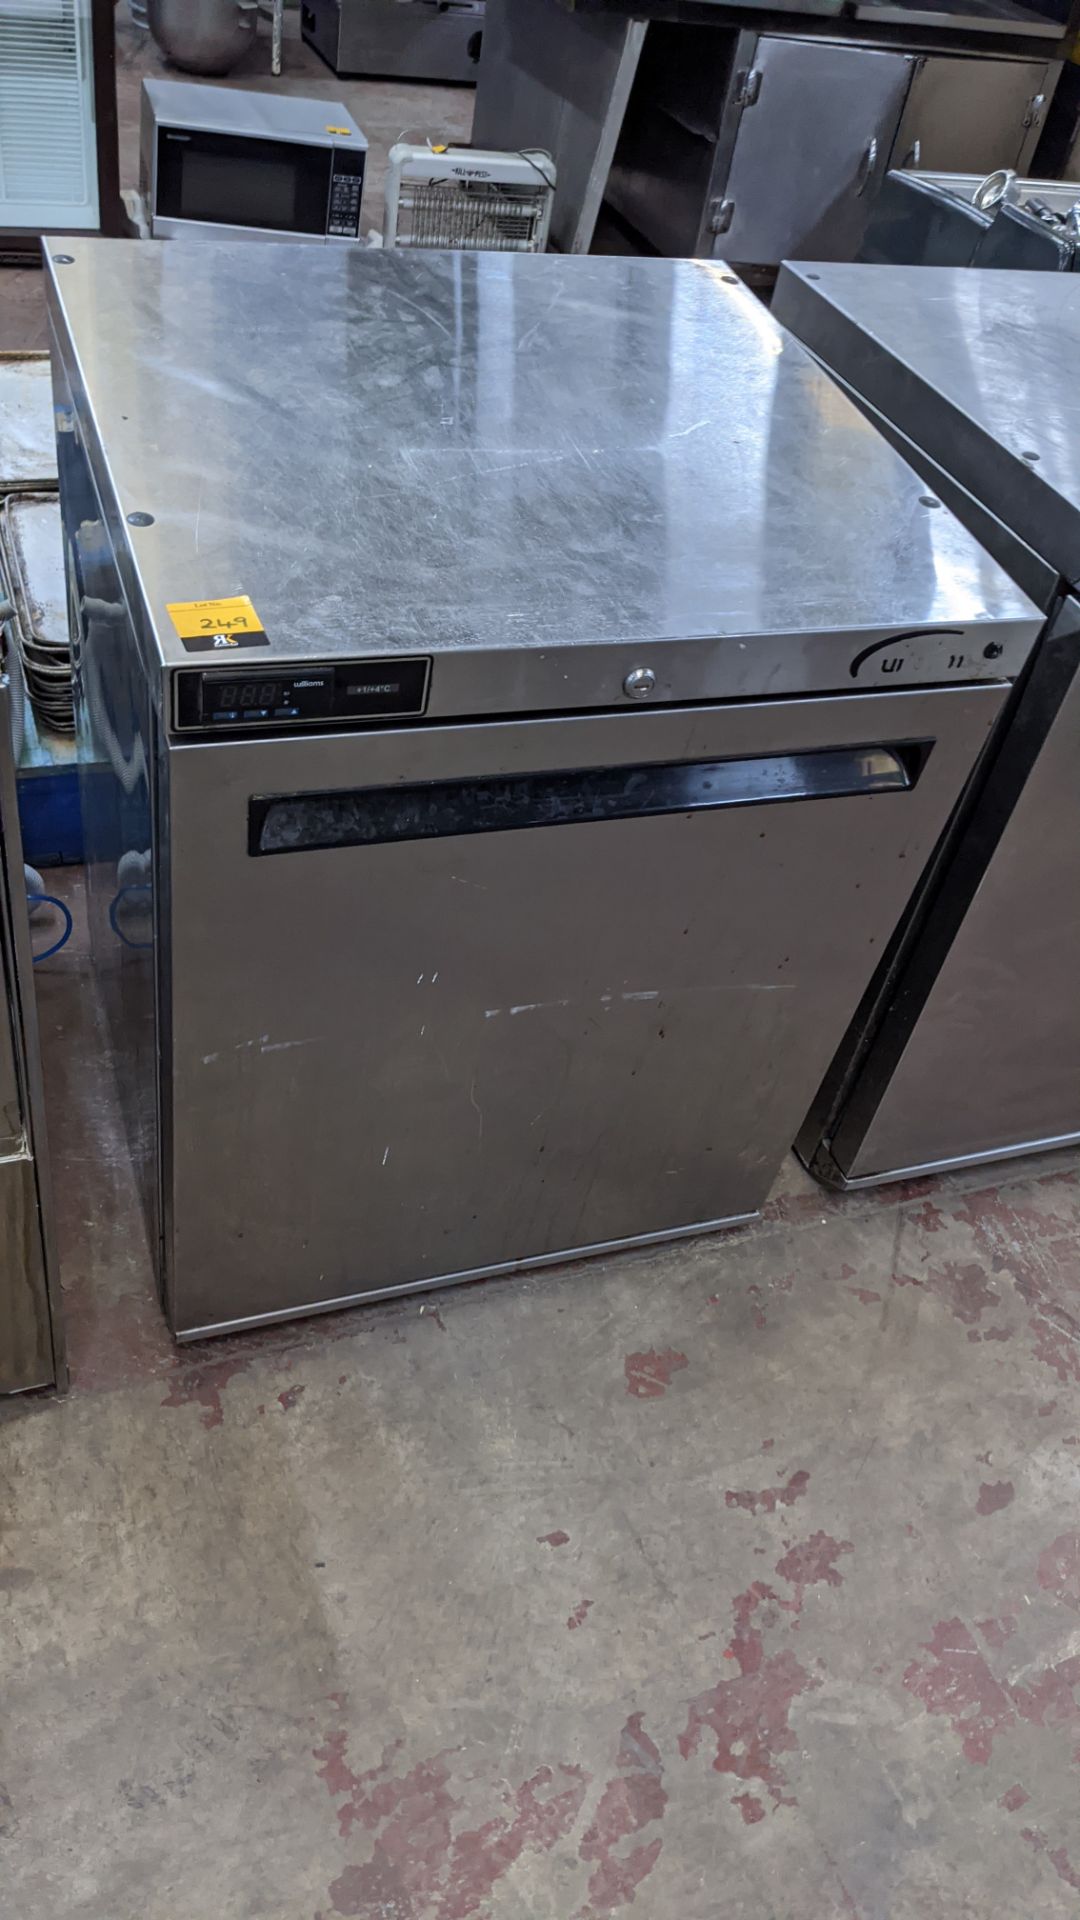 Williams HA135SA stainless steel undercounter fridge